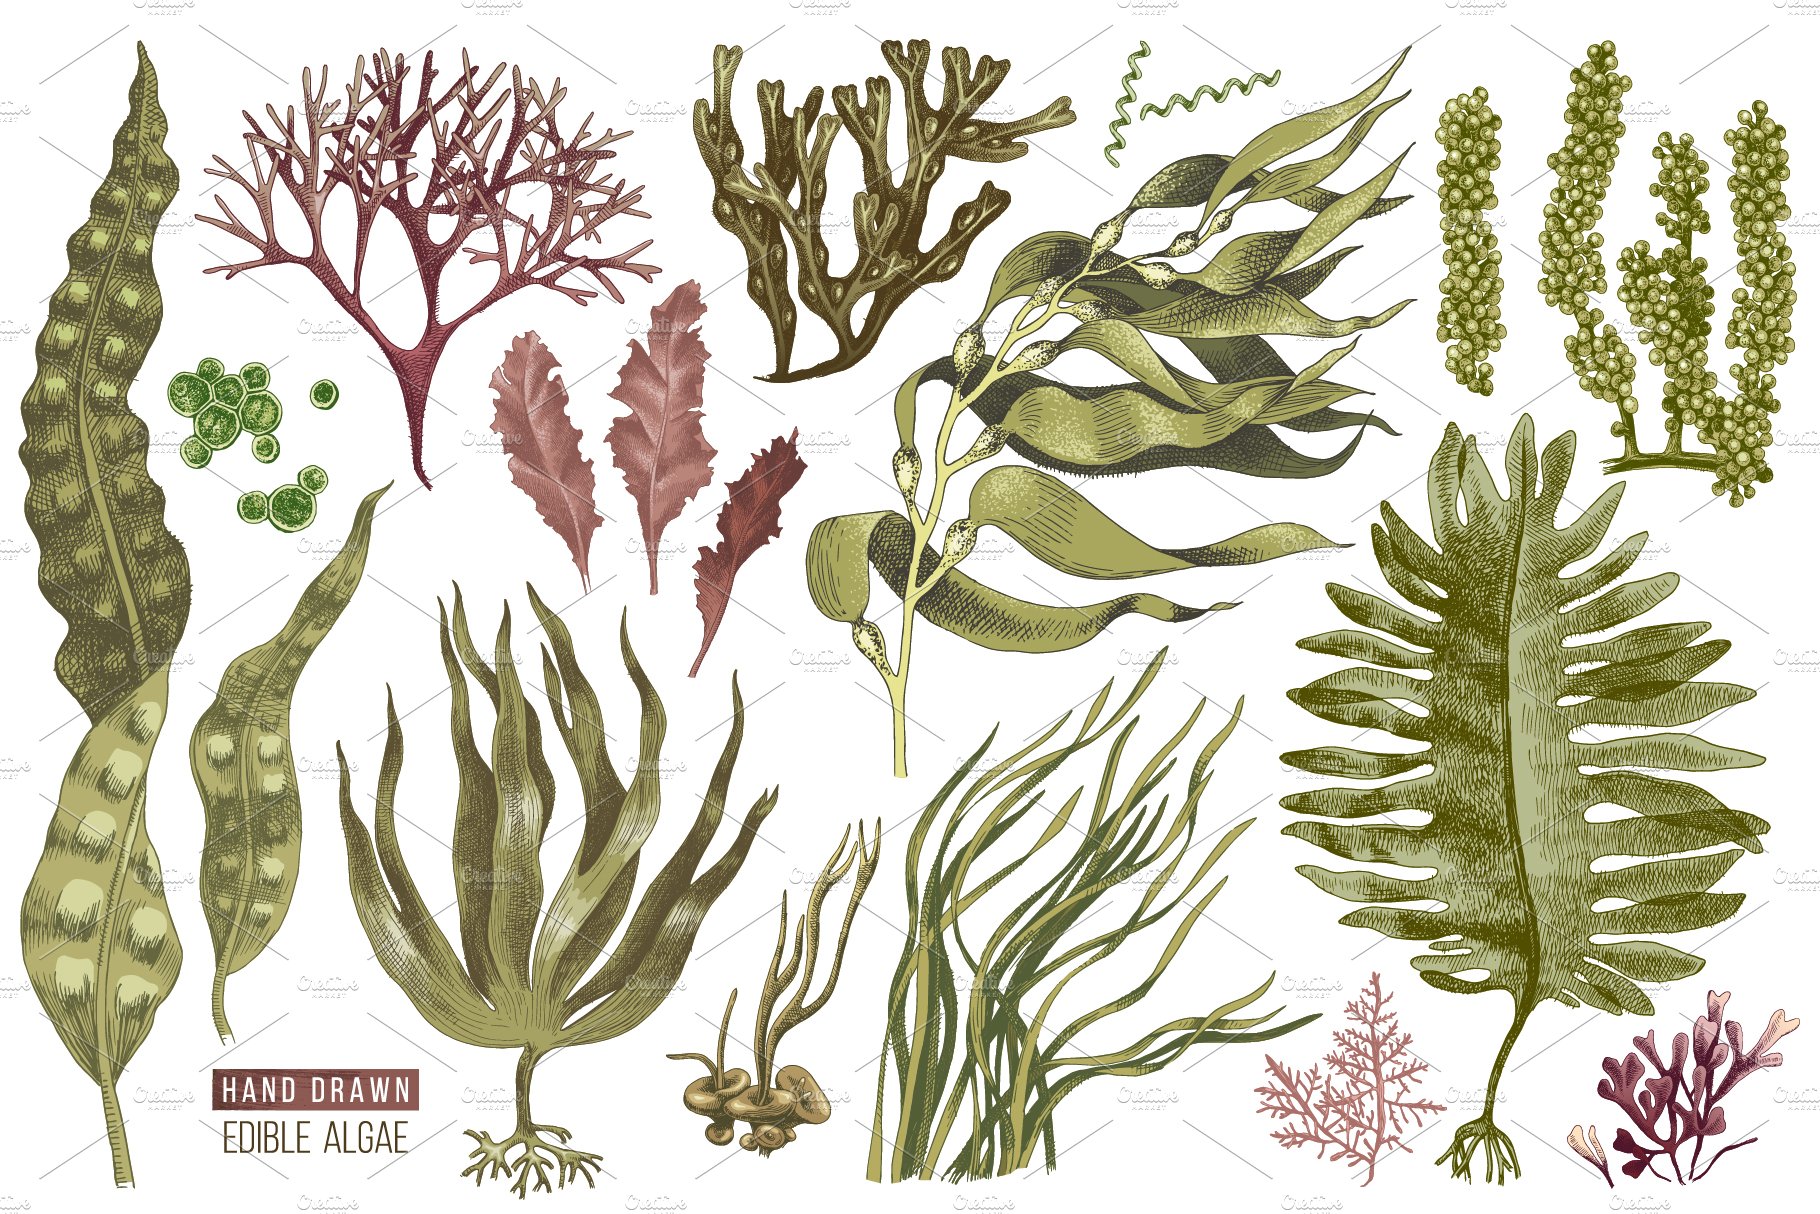 Hand drawn edible seaweeds preview image.